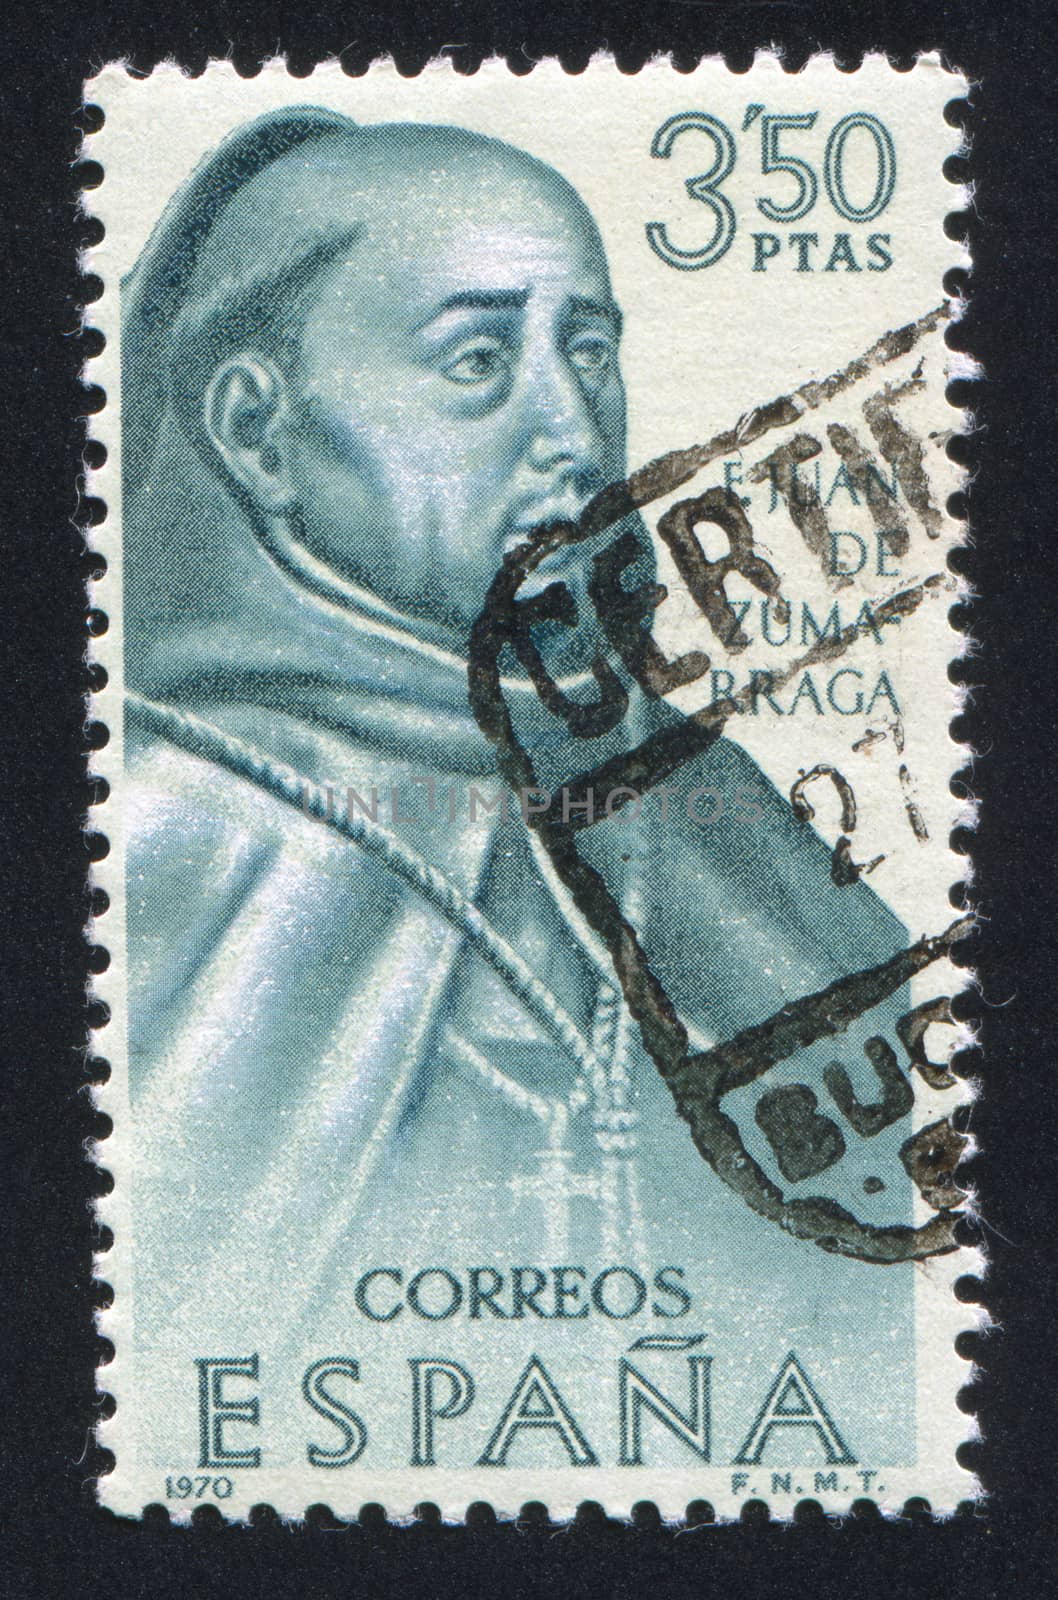 SPAIN - CIRCA 1970: stamp printed by Spain, shows Portrait of E.Juan de Zumabraga, circa 1970